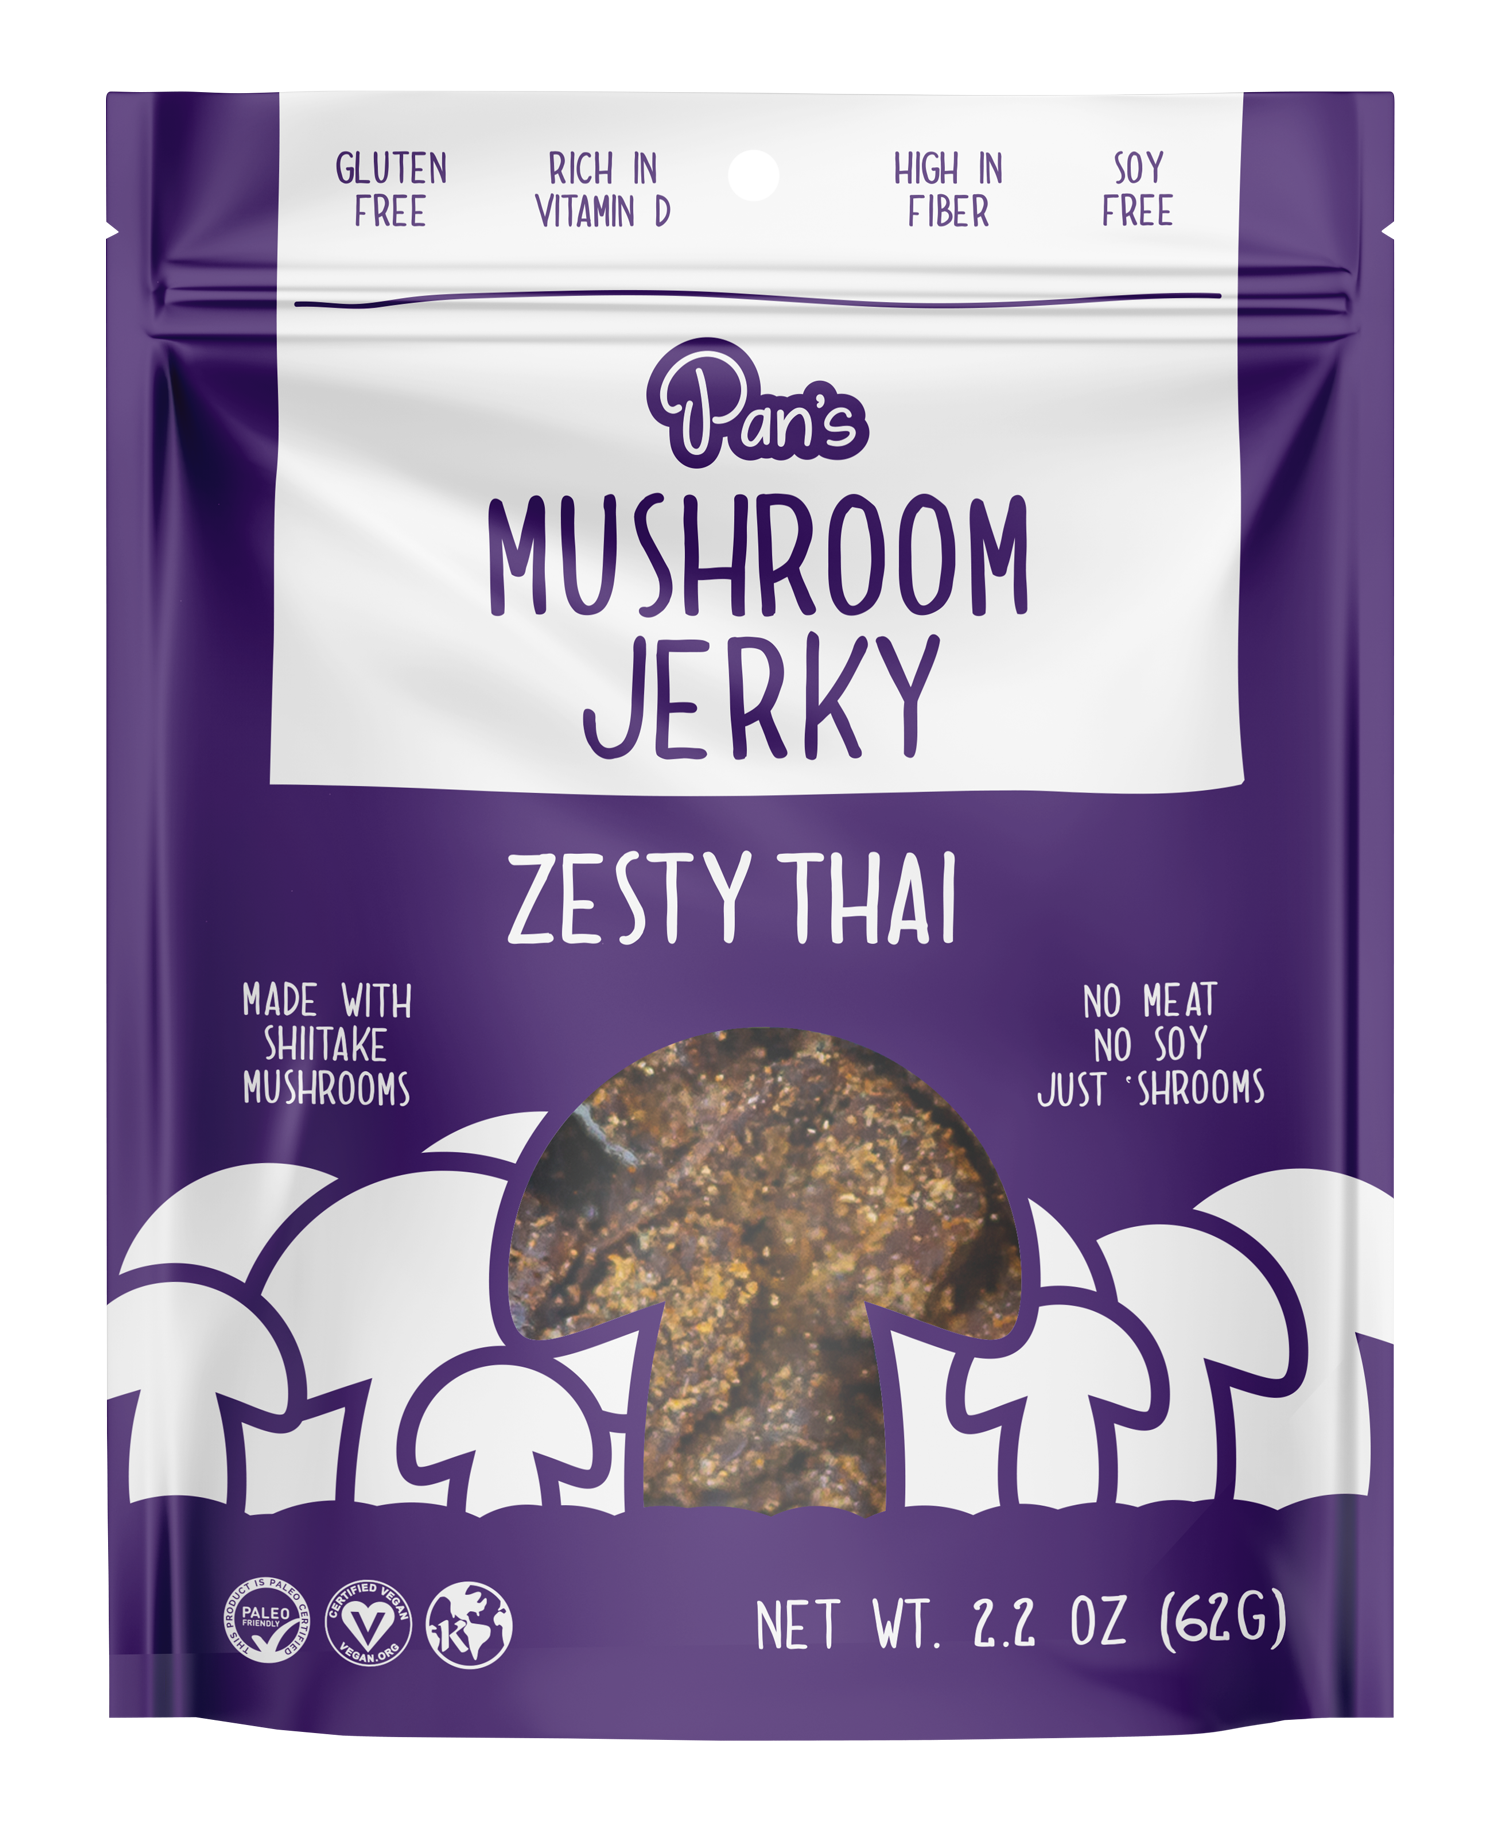 Pan's Mushroom Jerky - Zesty Thai mushroom jerky